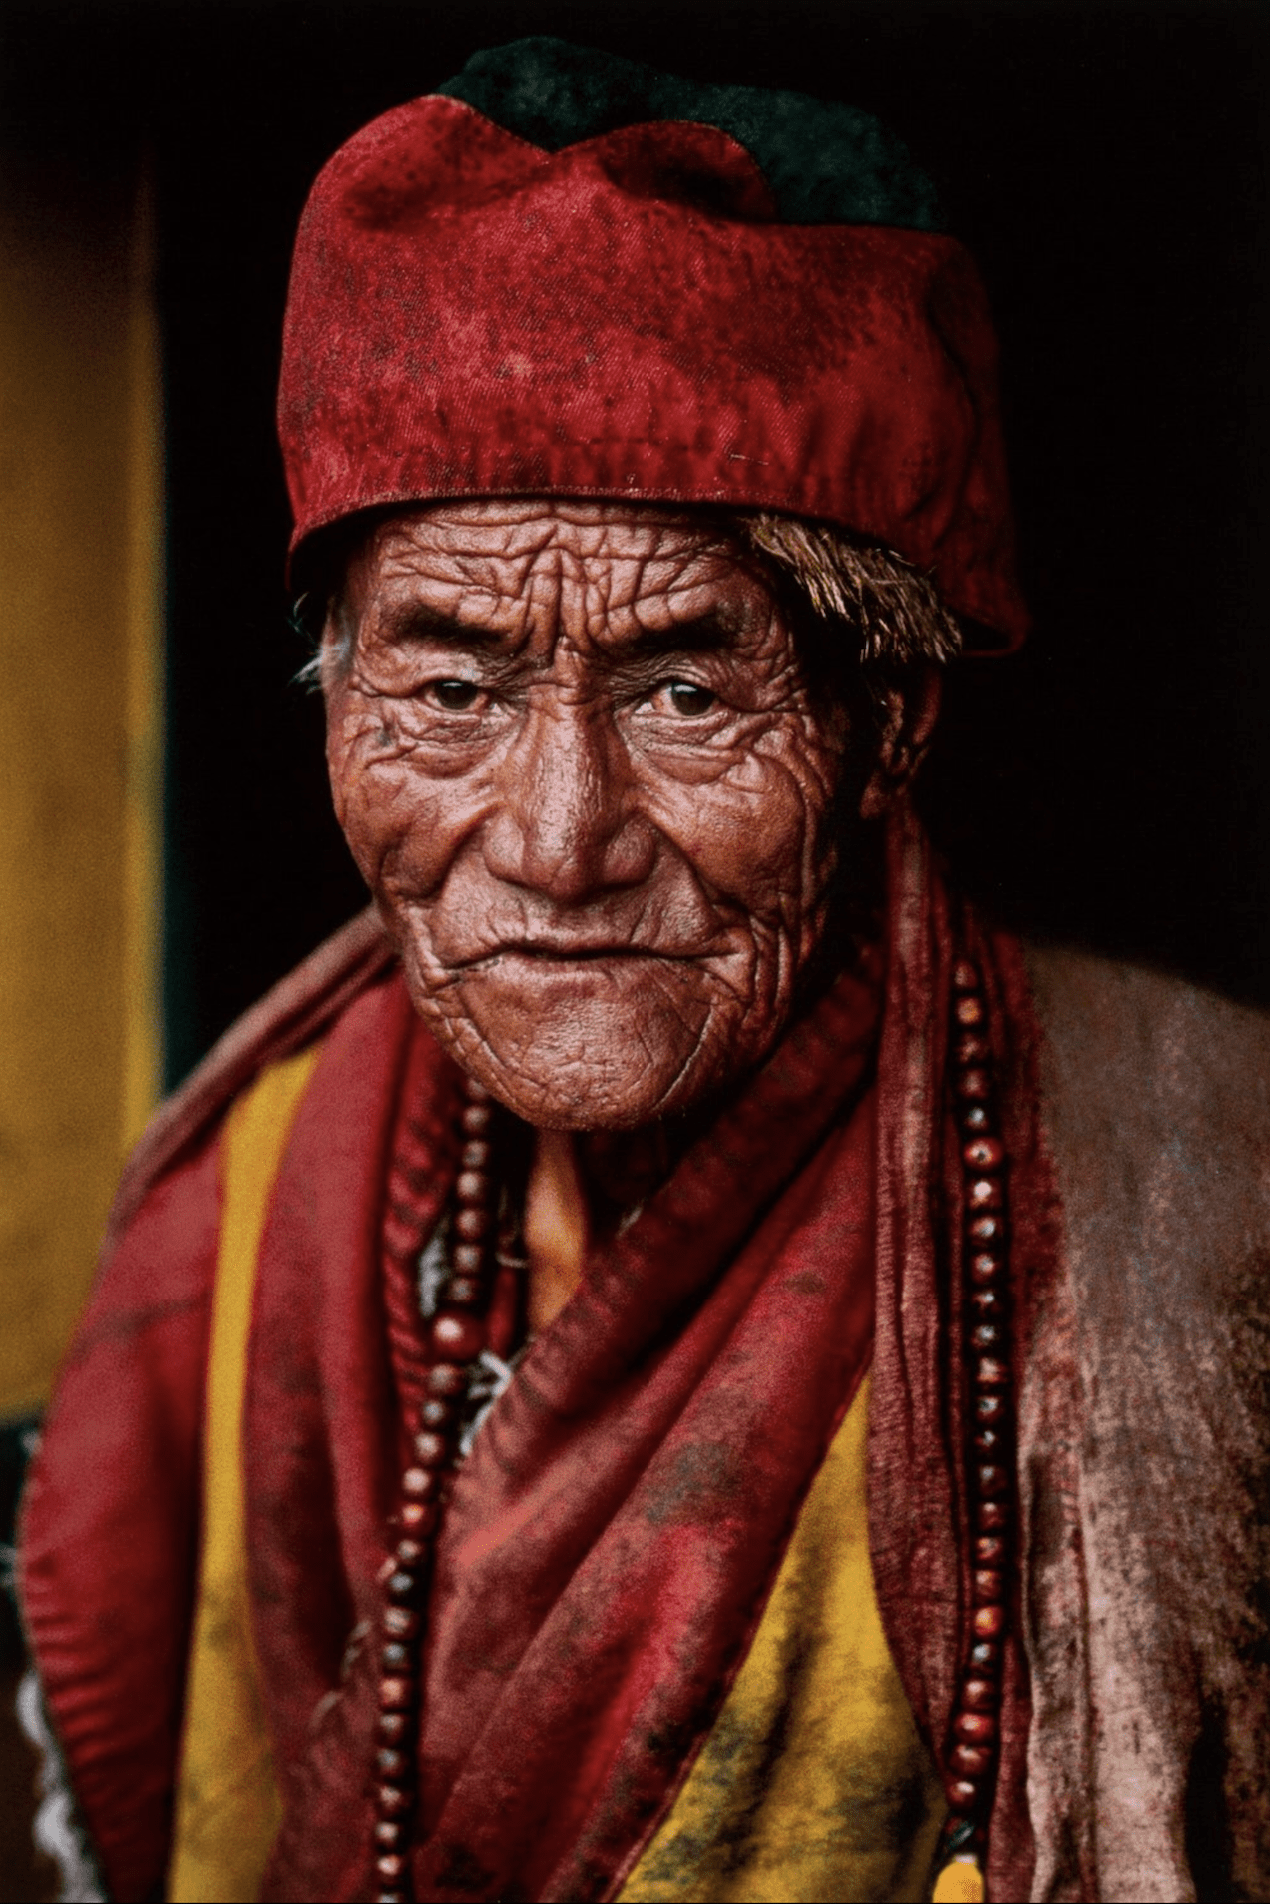 Monk At Jokhang Temple Lhasa Tibet, 2000 Steve McCurry